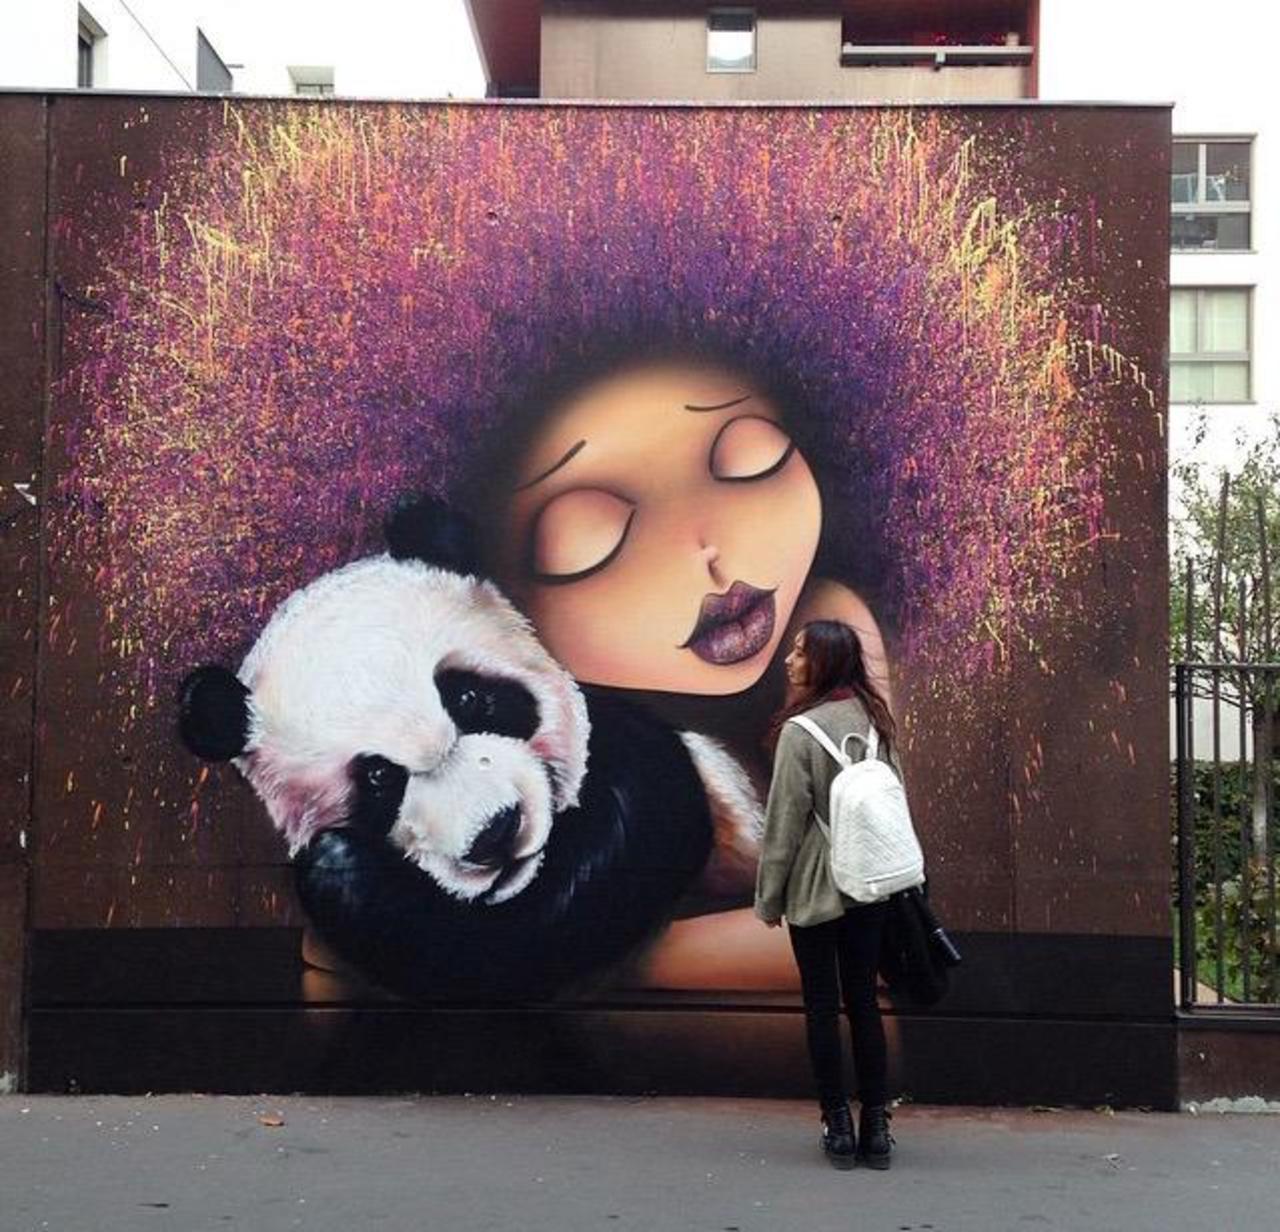 Street Art by VinieGraffiti in Paris 

#art #graffiti #mural #streetart http://t.co/Xk5DlUFBZg